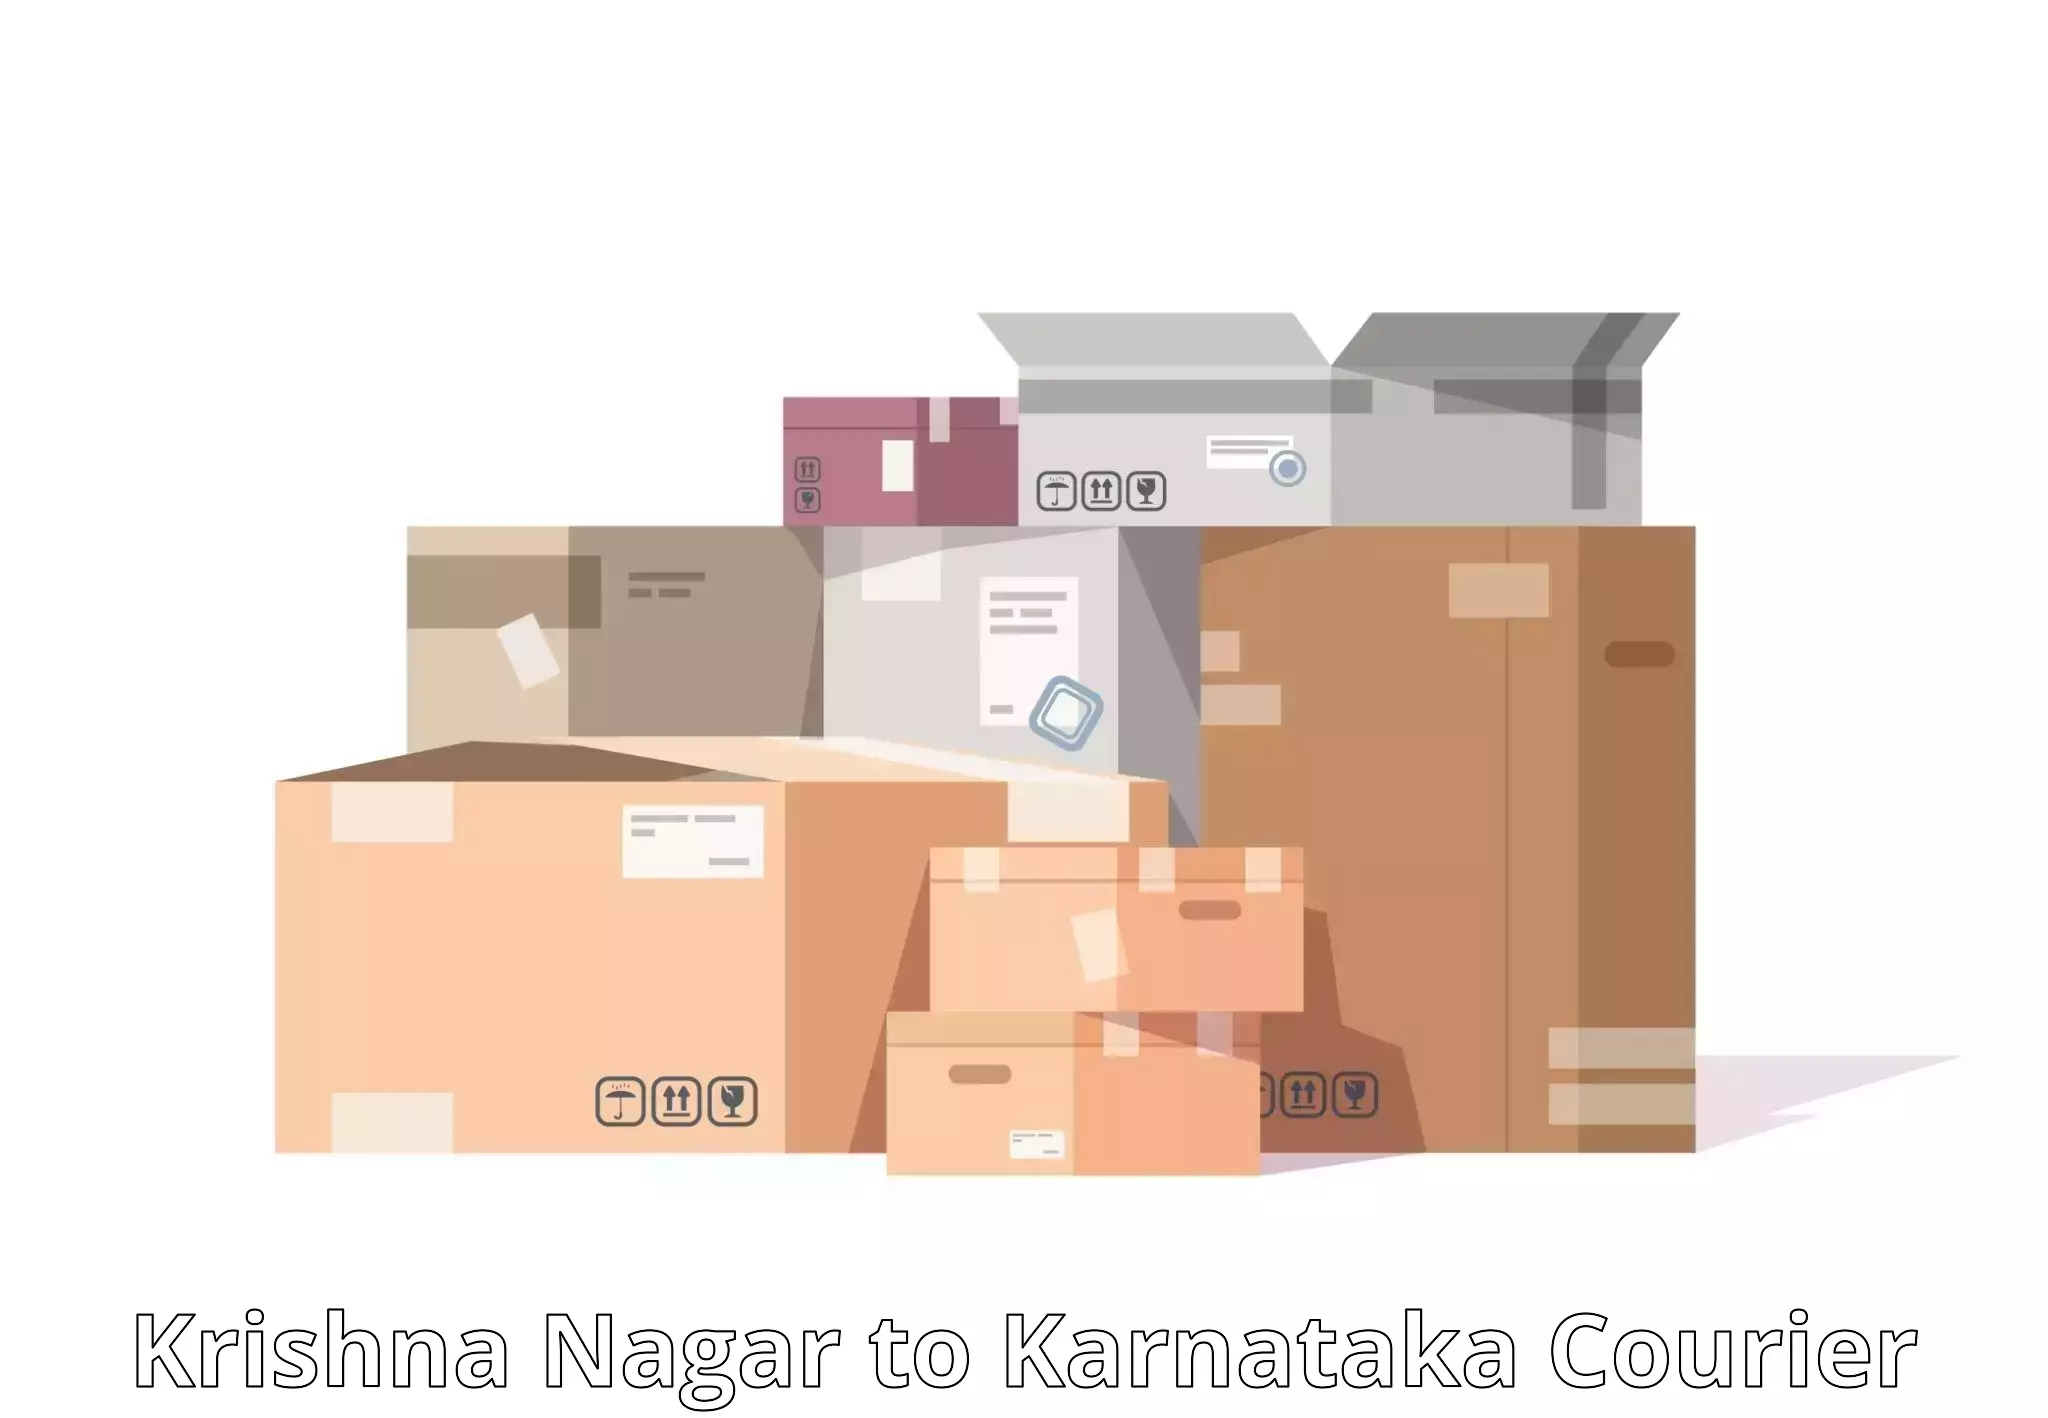 Courier service comparison in Krishna Nagar to Kudligi